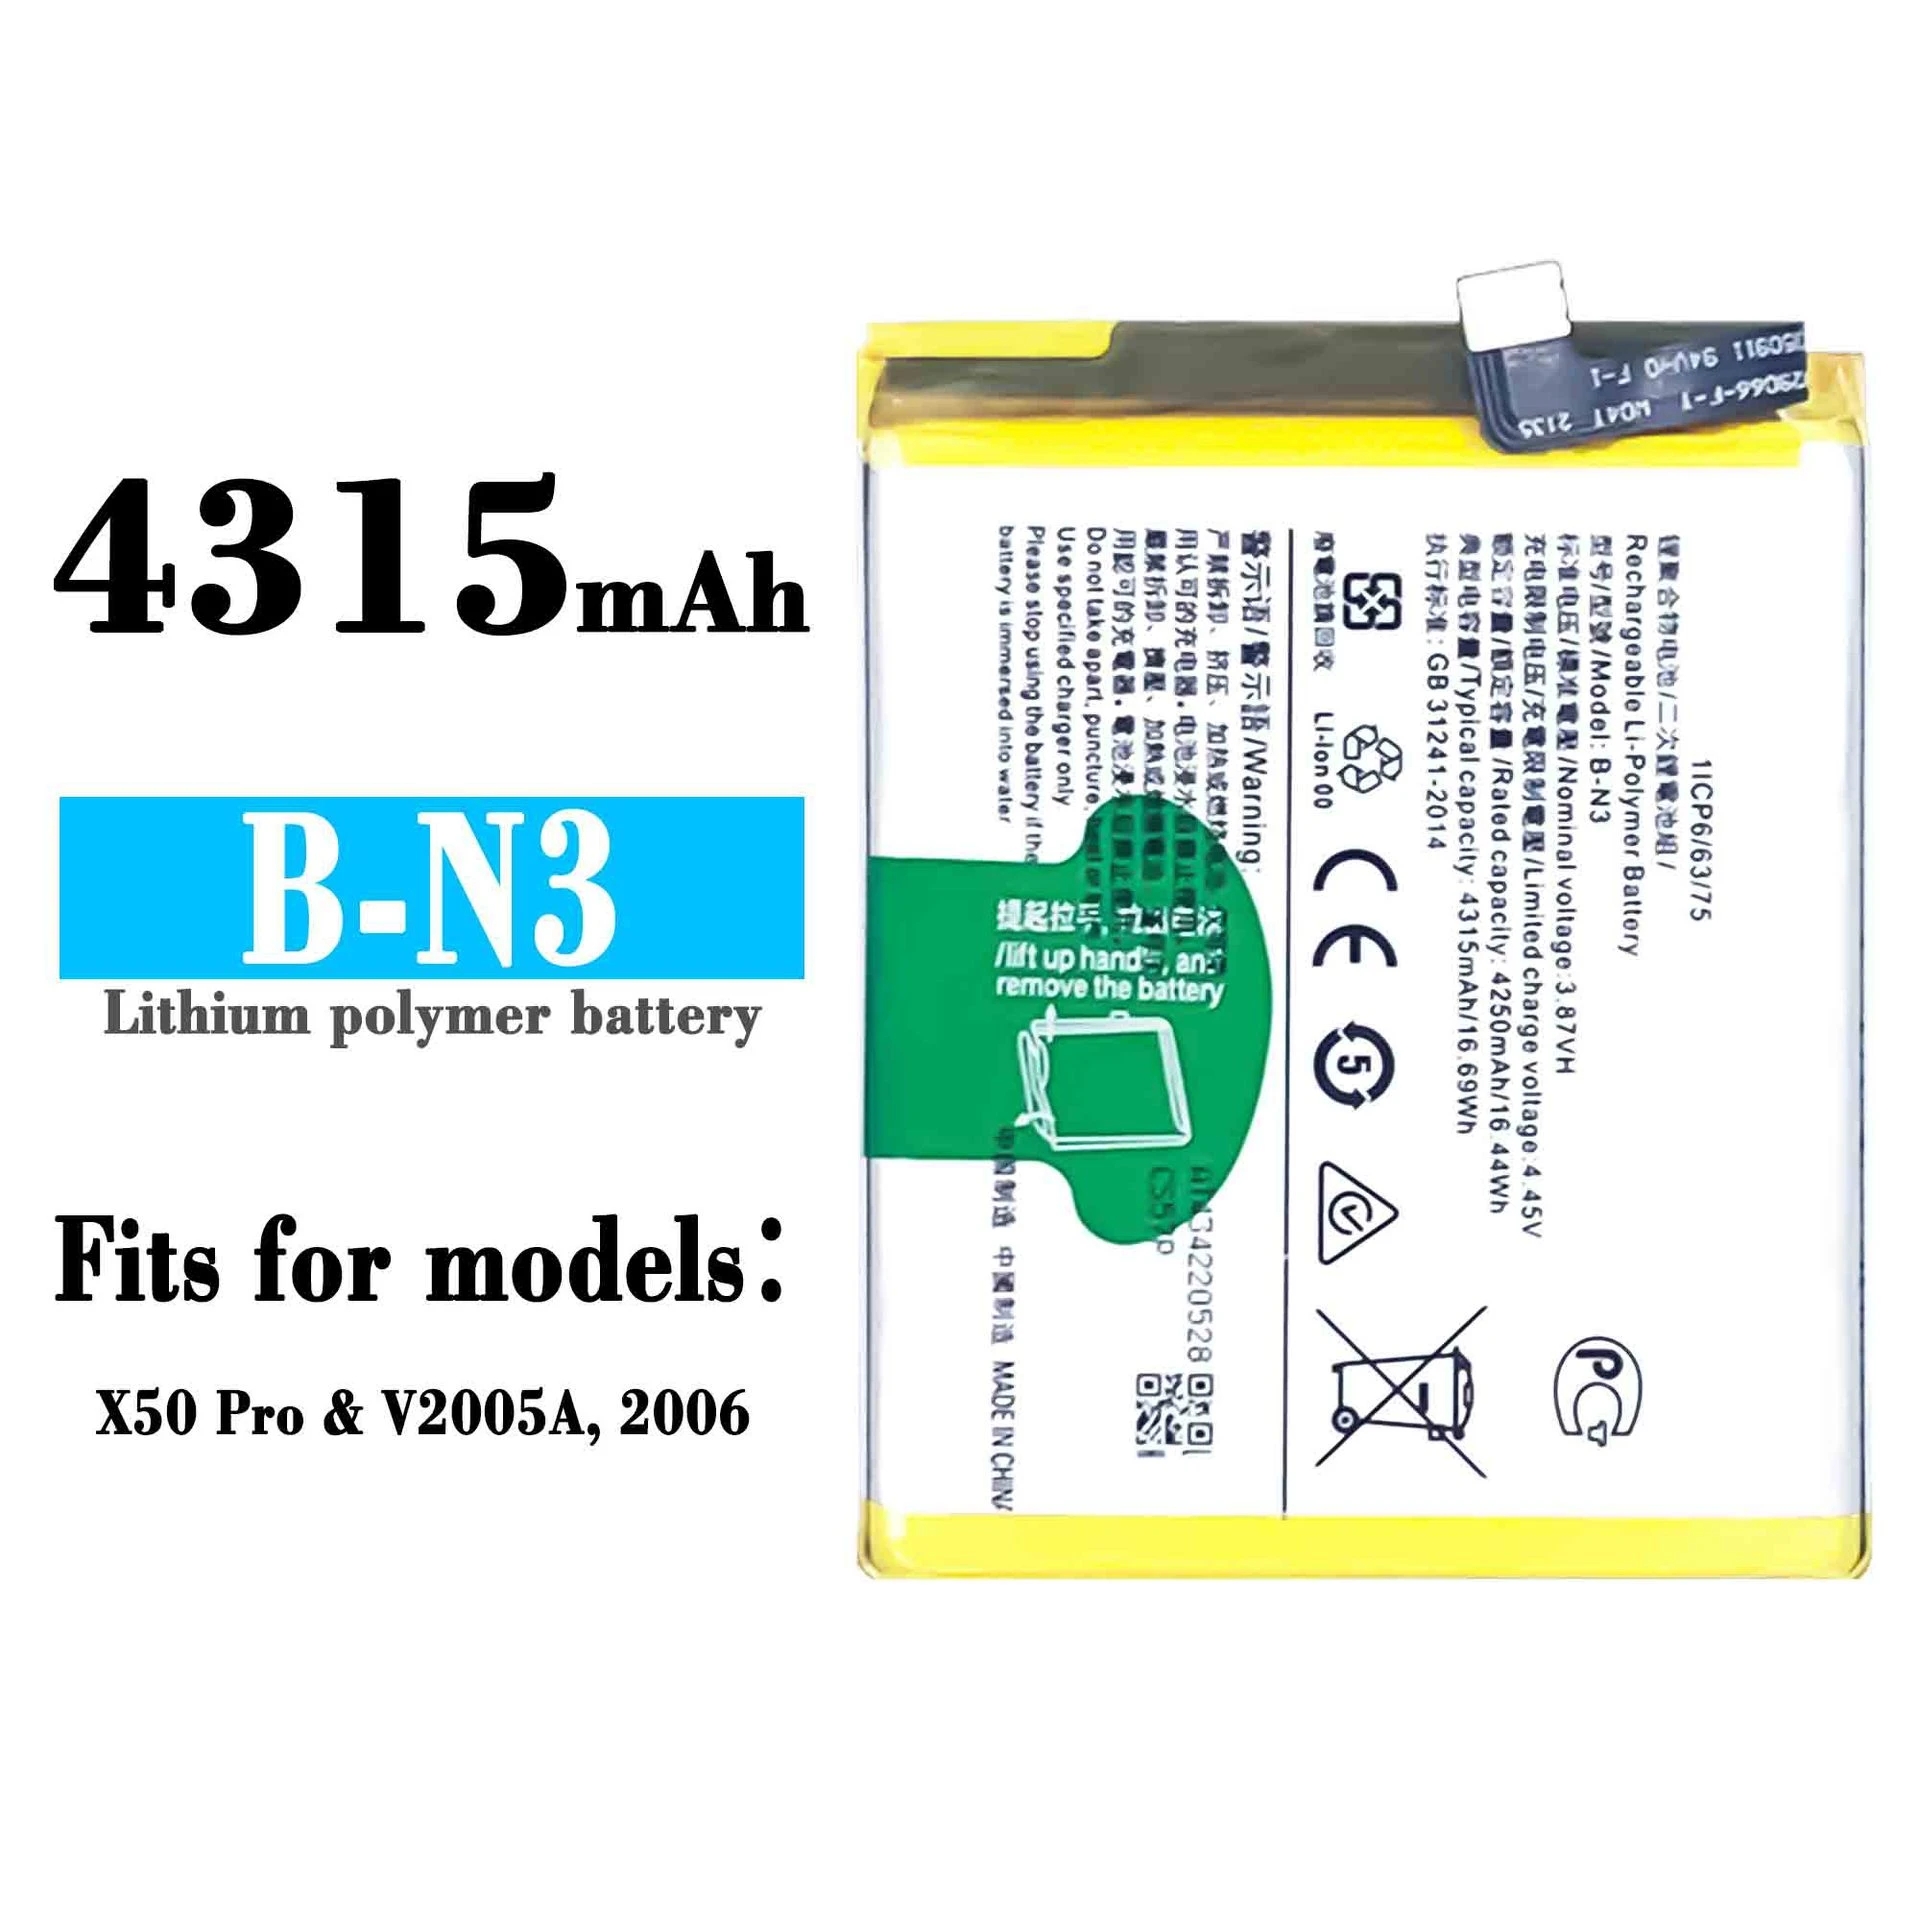 B-N3 Battery